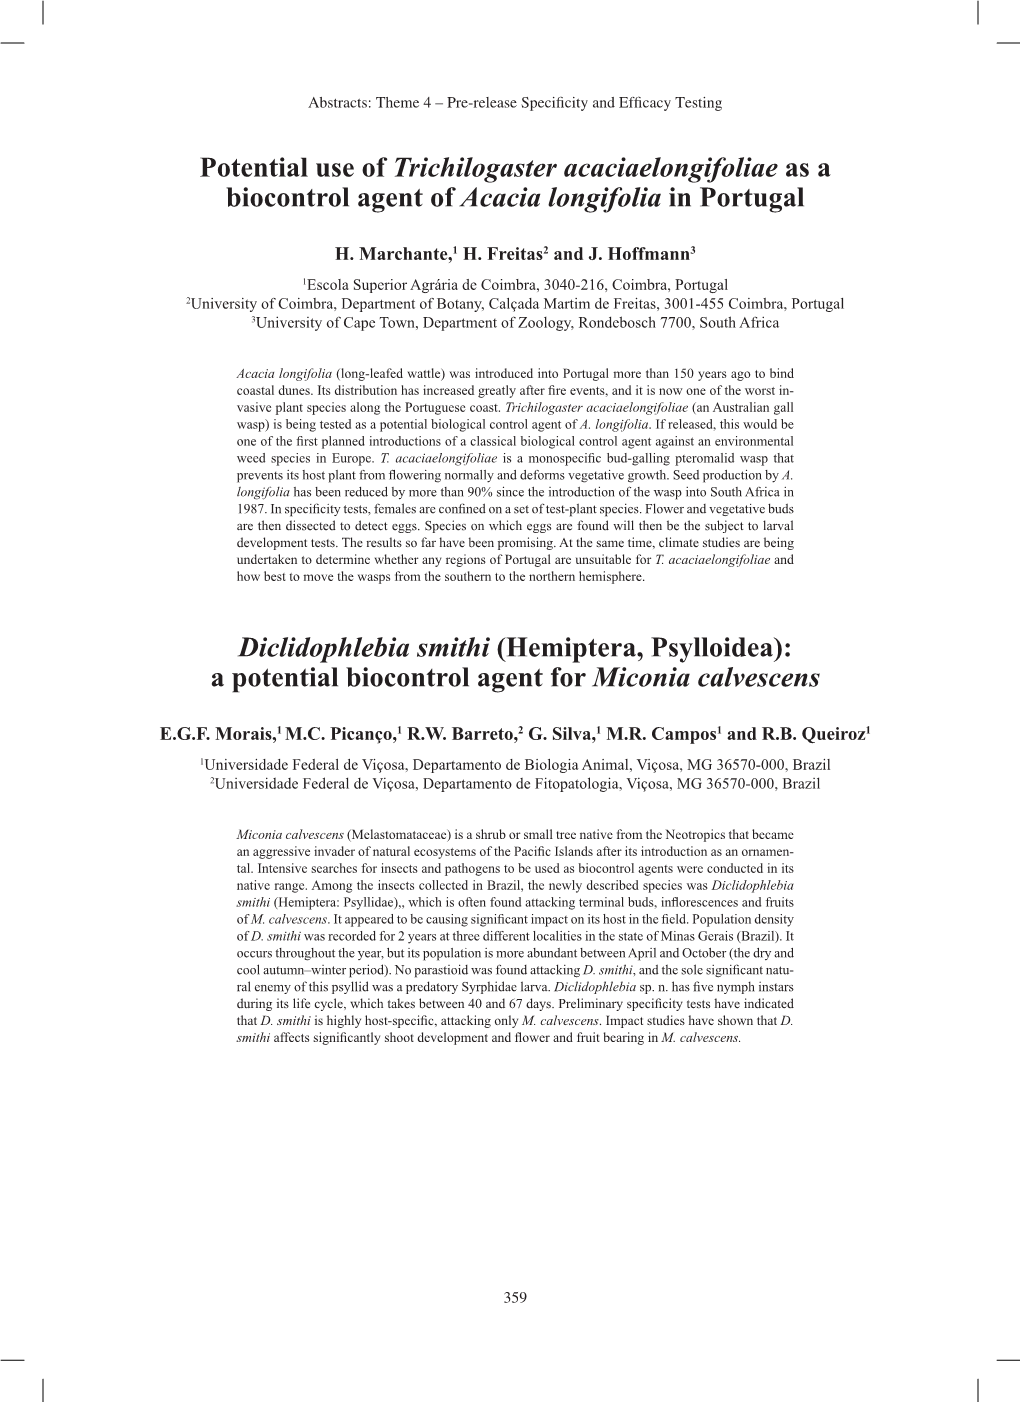 Potential Use of Trichilogaster Acaciaelongifoliae As a Biocontrol Agent of Acacia Longifolia in Portugal